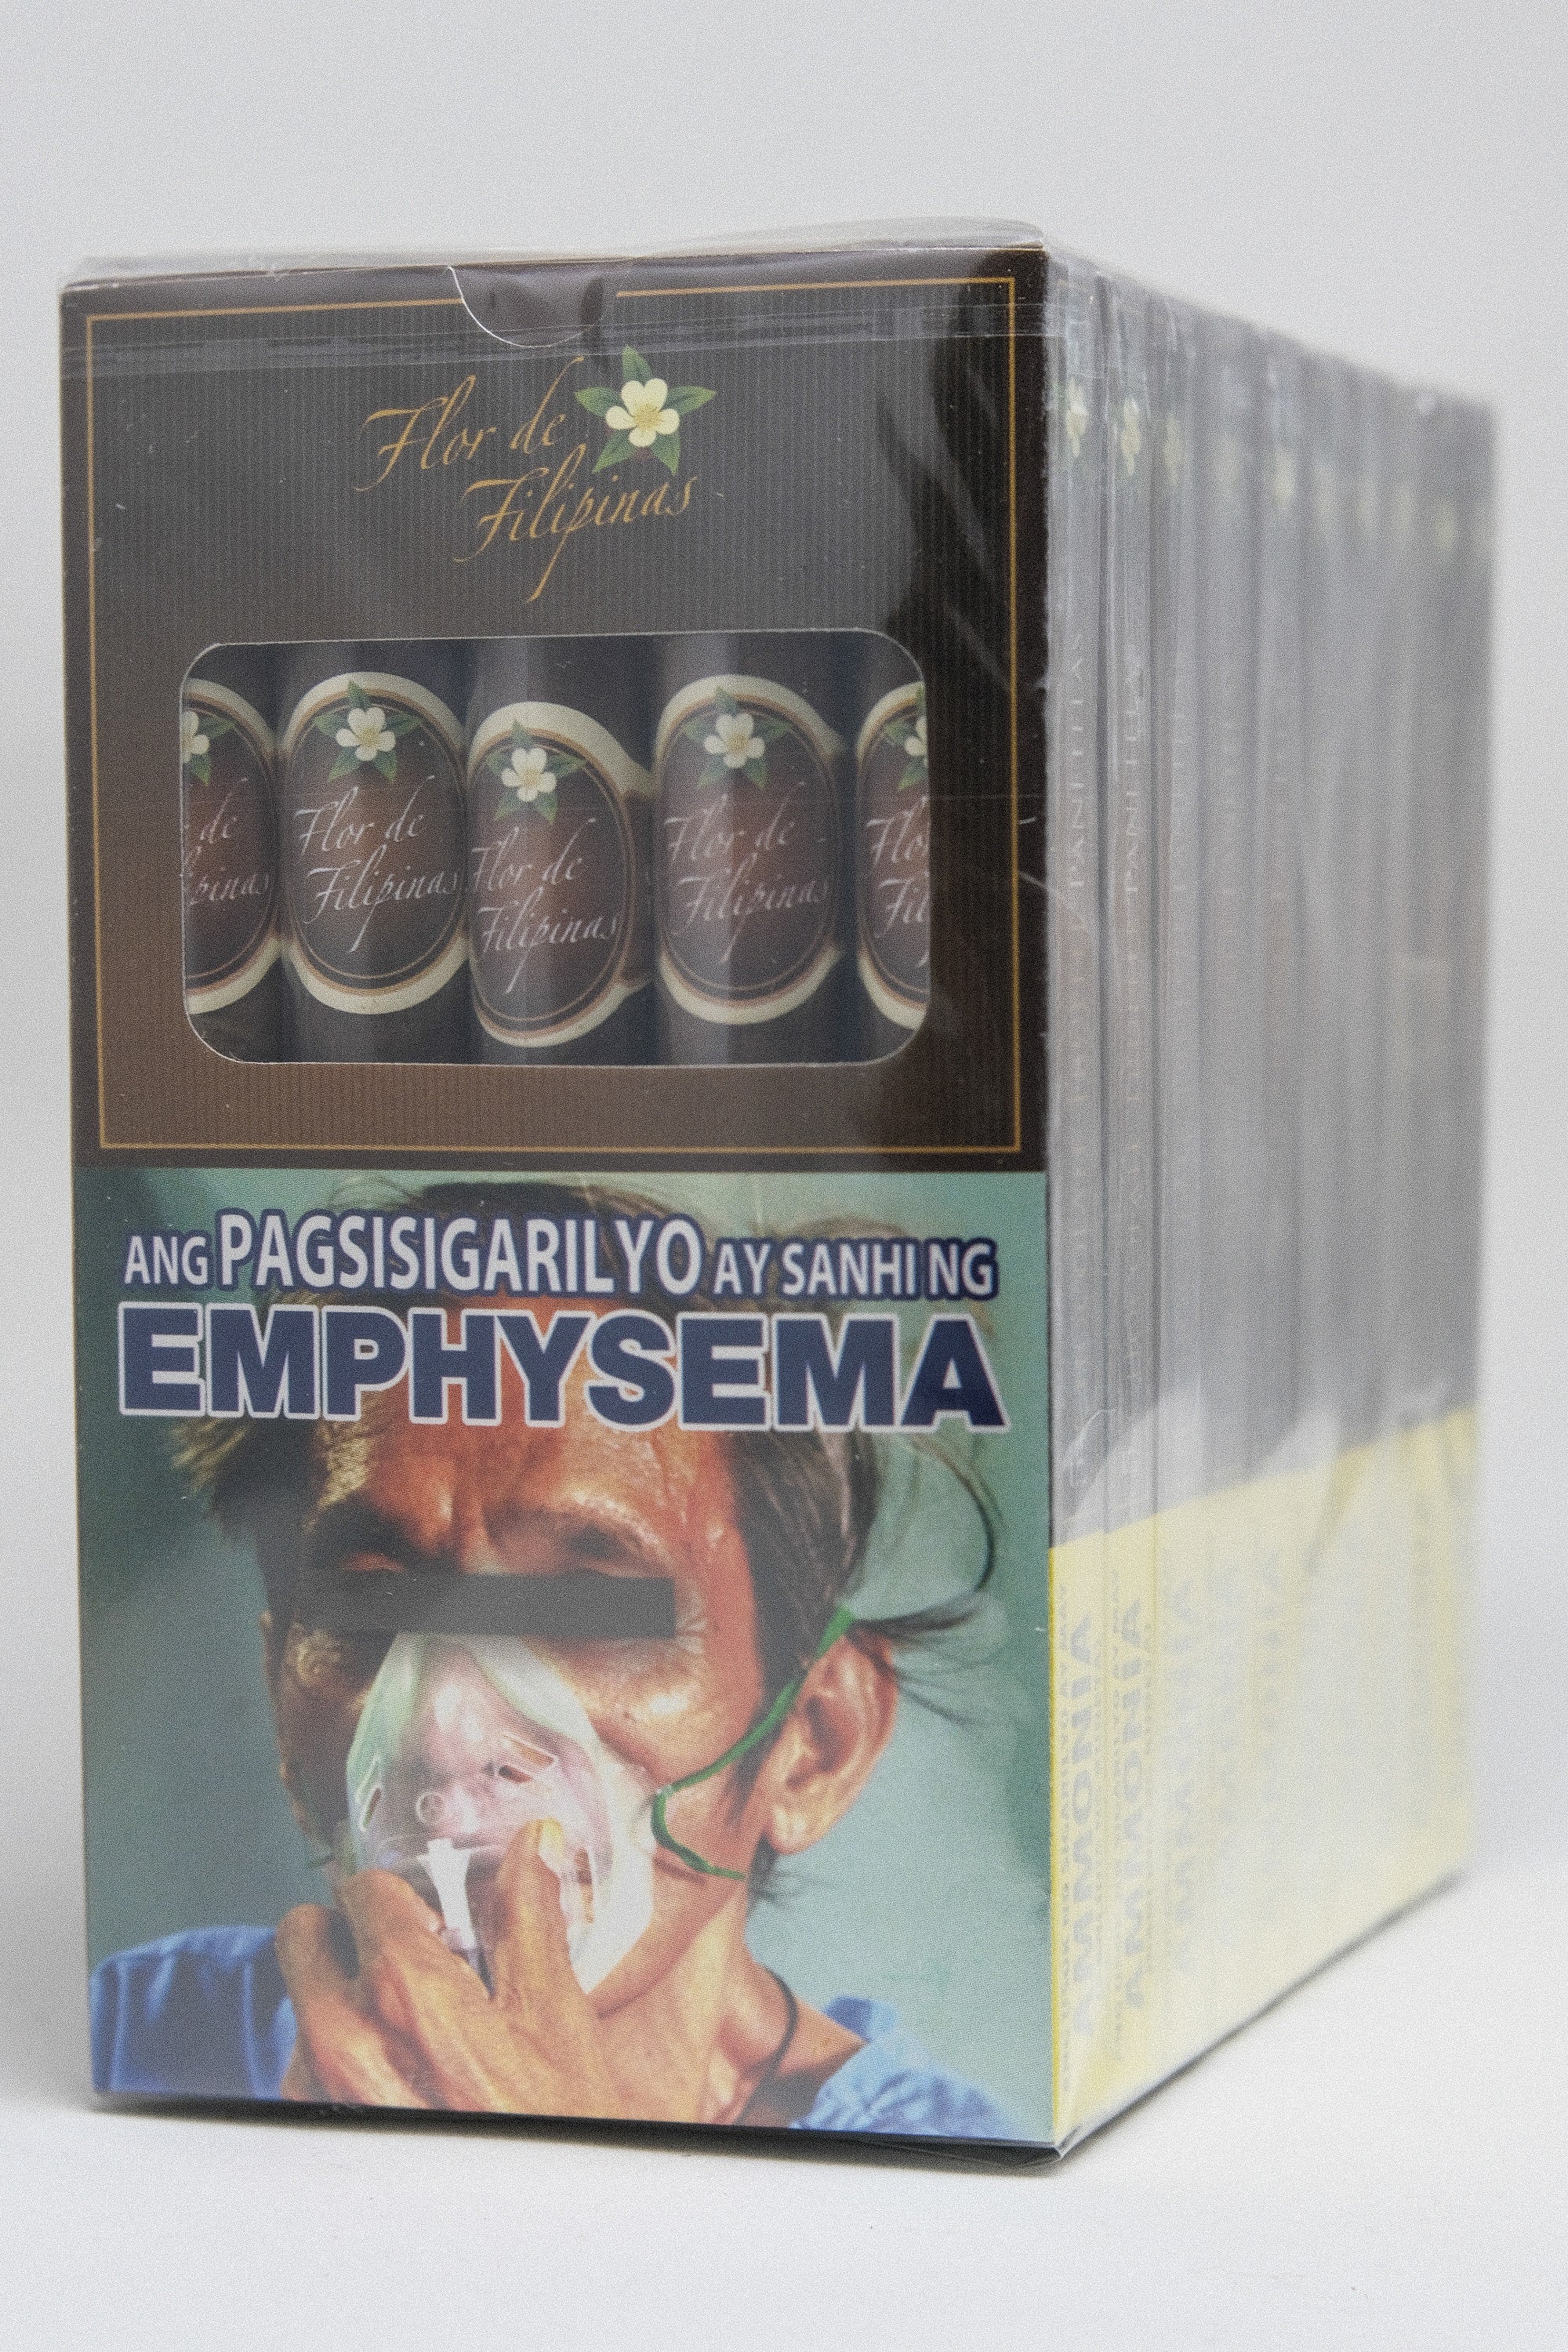 Flavored Cigars Panetelas Cartons 50s